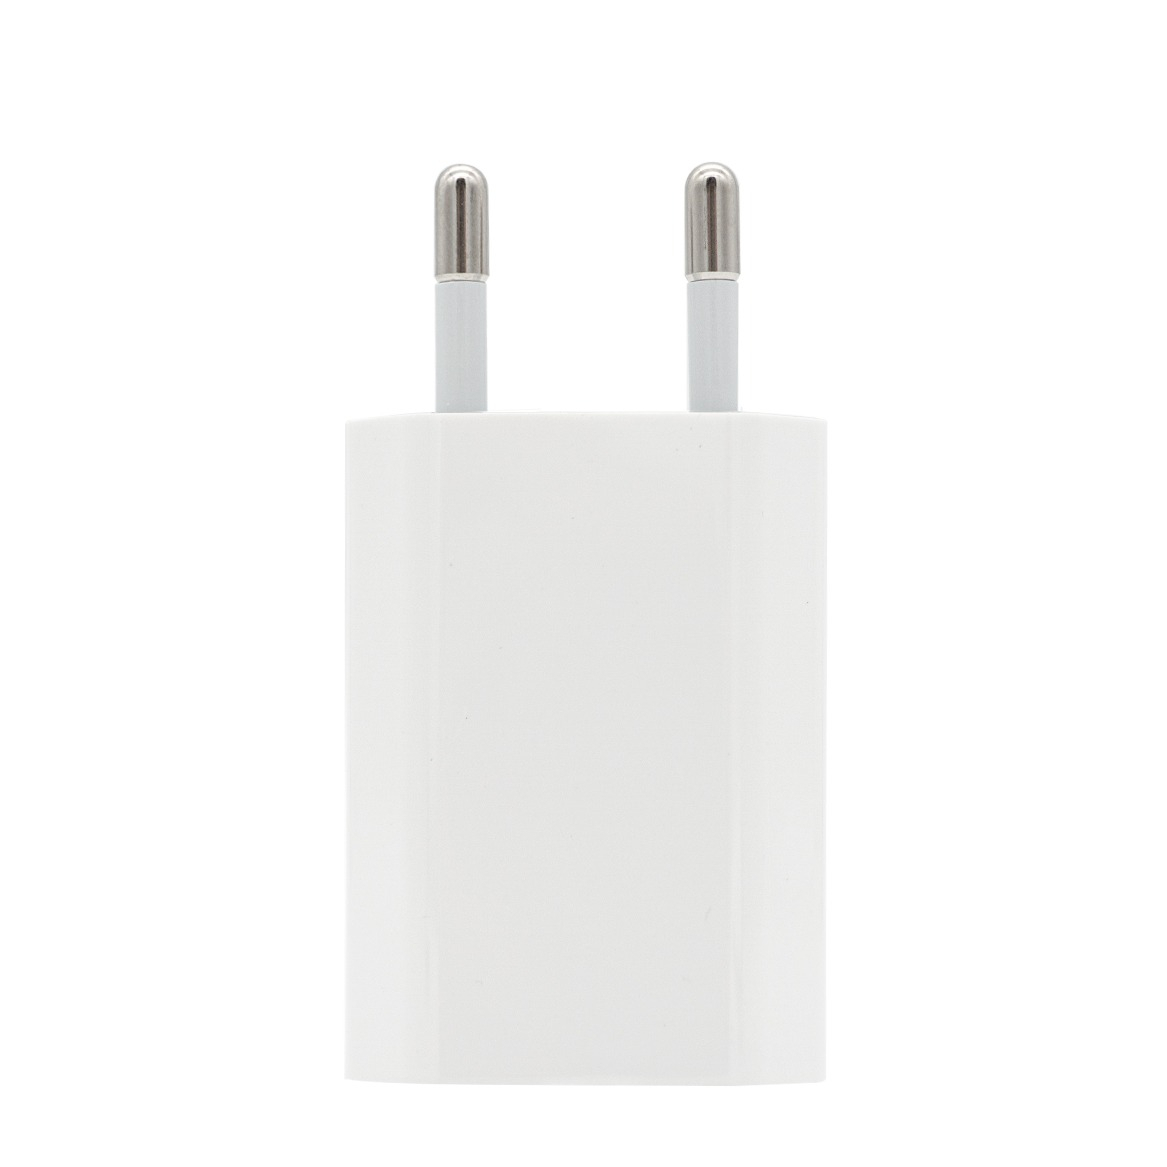 Image of Apple - iPhone Xs Ladegerät / USB Netzteil 5W A1400 MD813ZM/A - Weiss bei Apfelkiste.ch